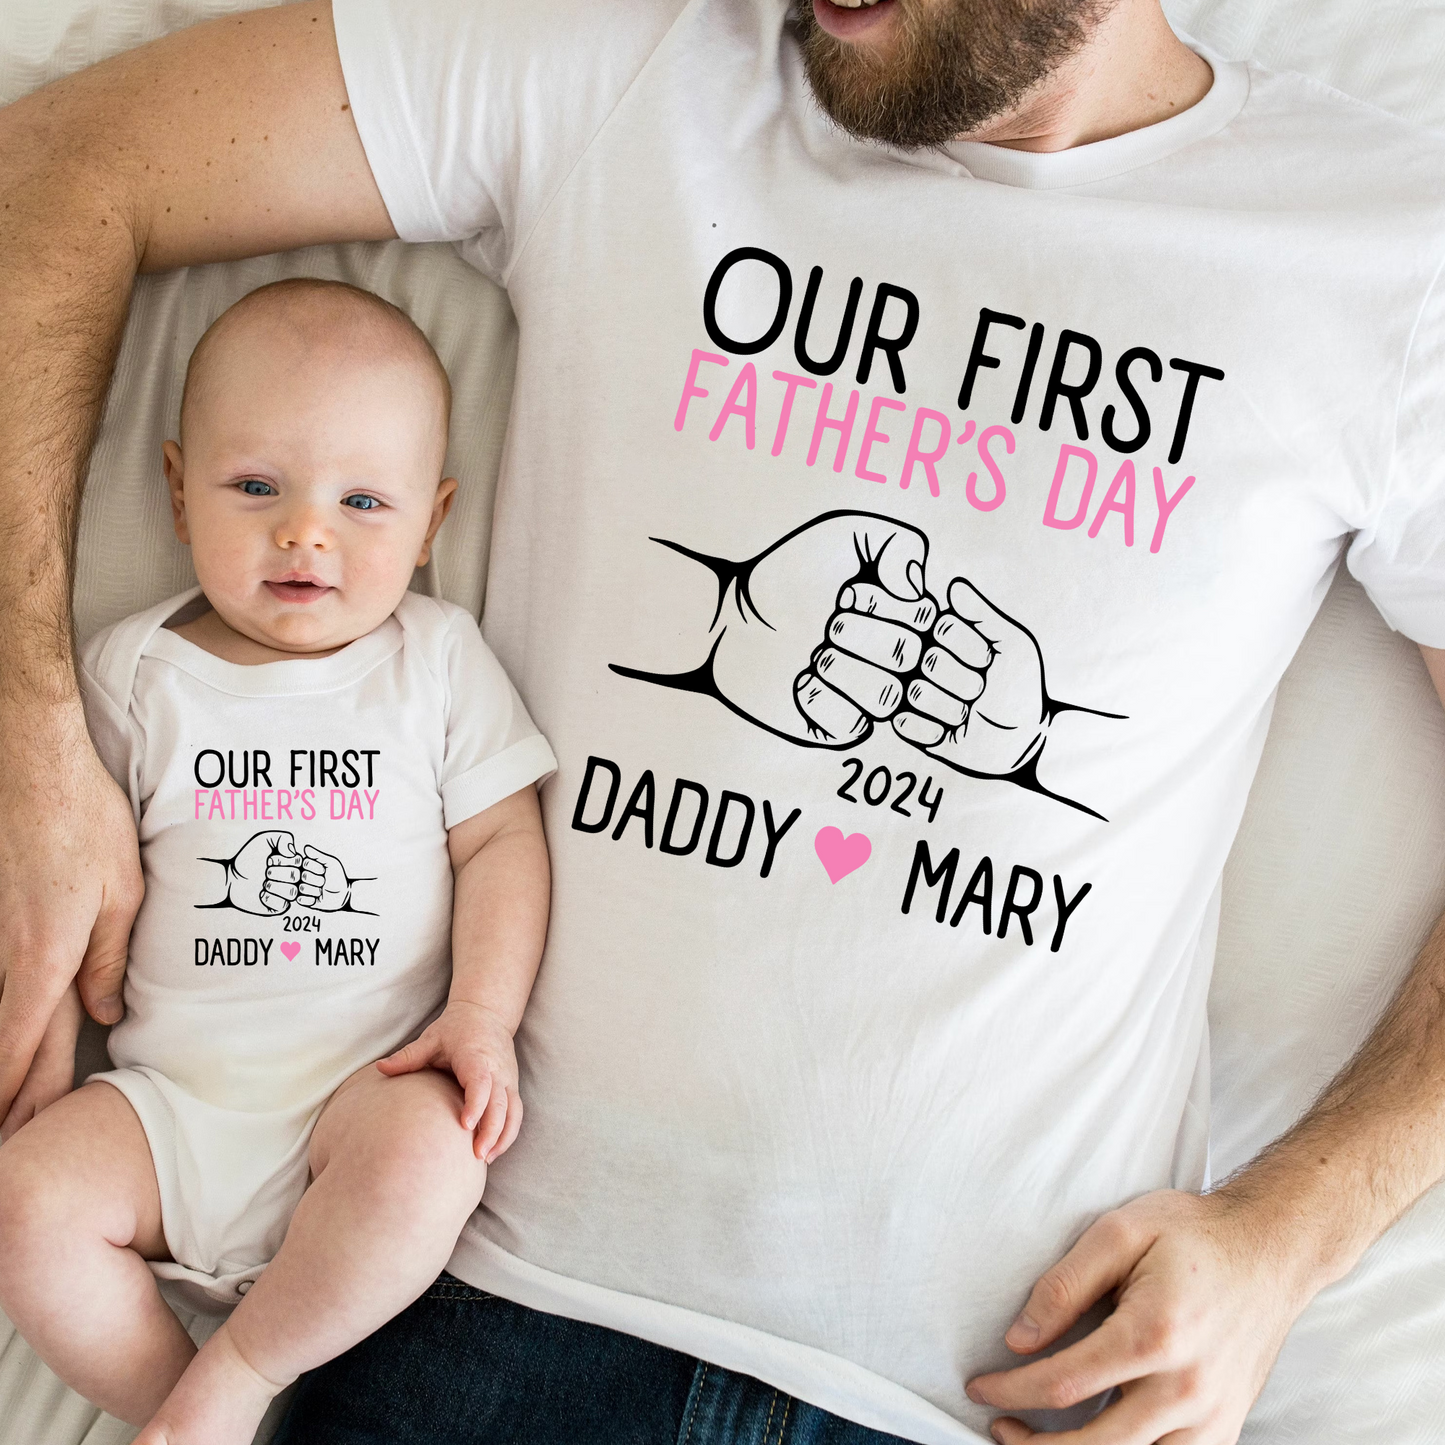 Unser Erster Vatertag - Personalisiertes Vater-Kind-T-Shirt